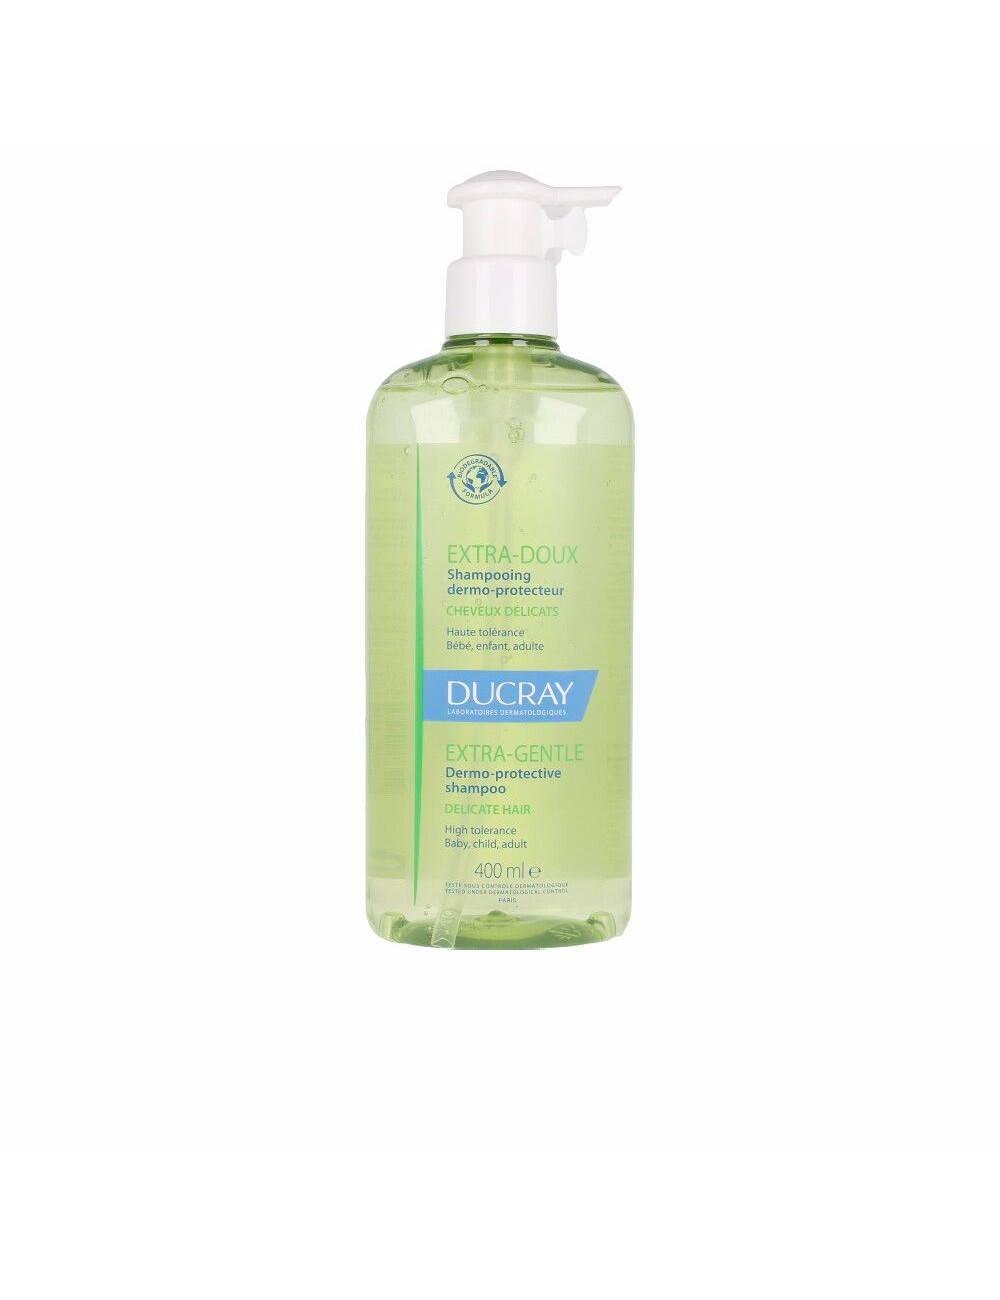 EXTRA-GENTLE dermo-protective shampoo 400ml